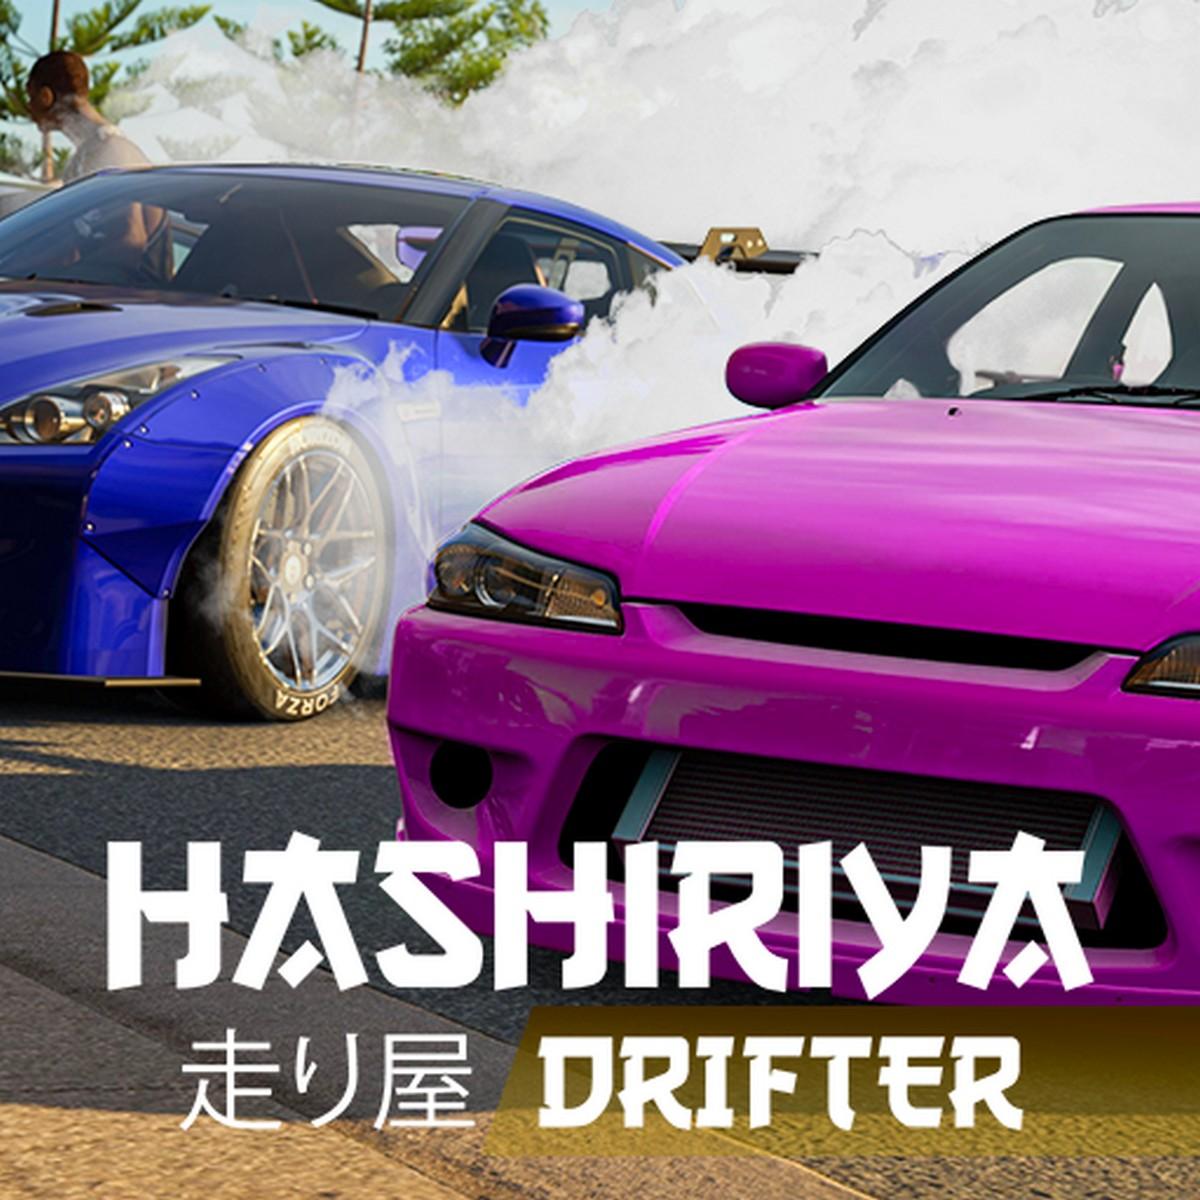 Hashiriya Drifter APK MOD v1.6.5 (Dinero infinito)